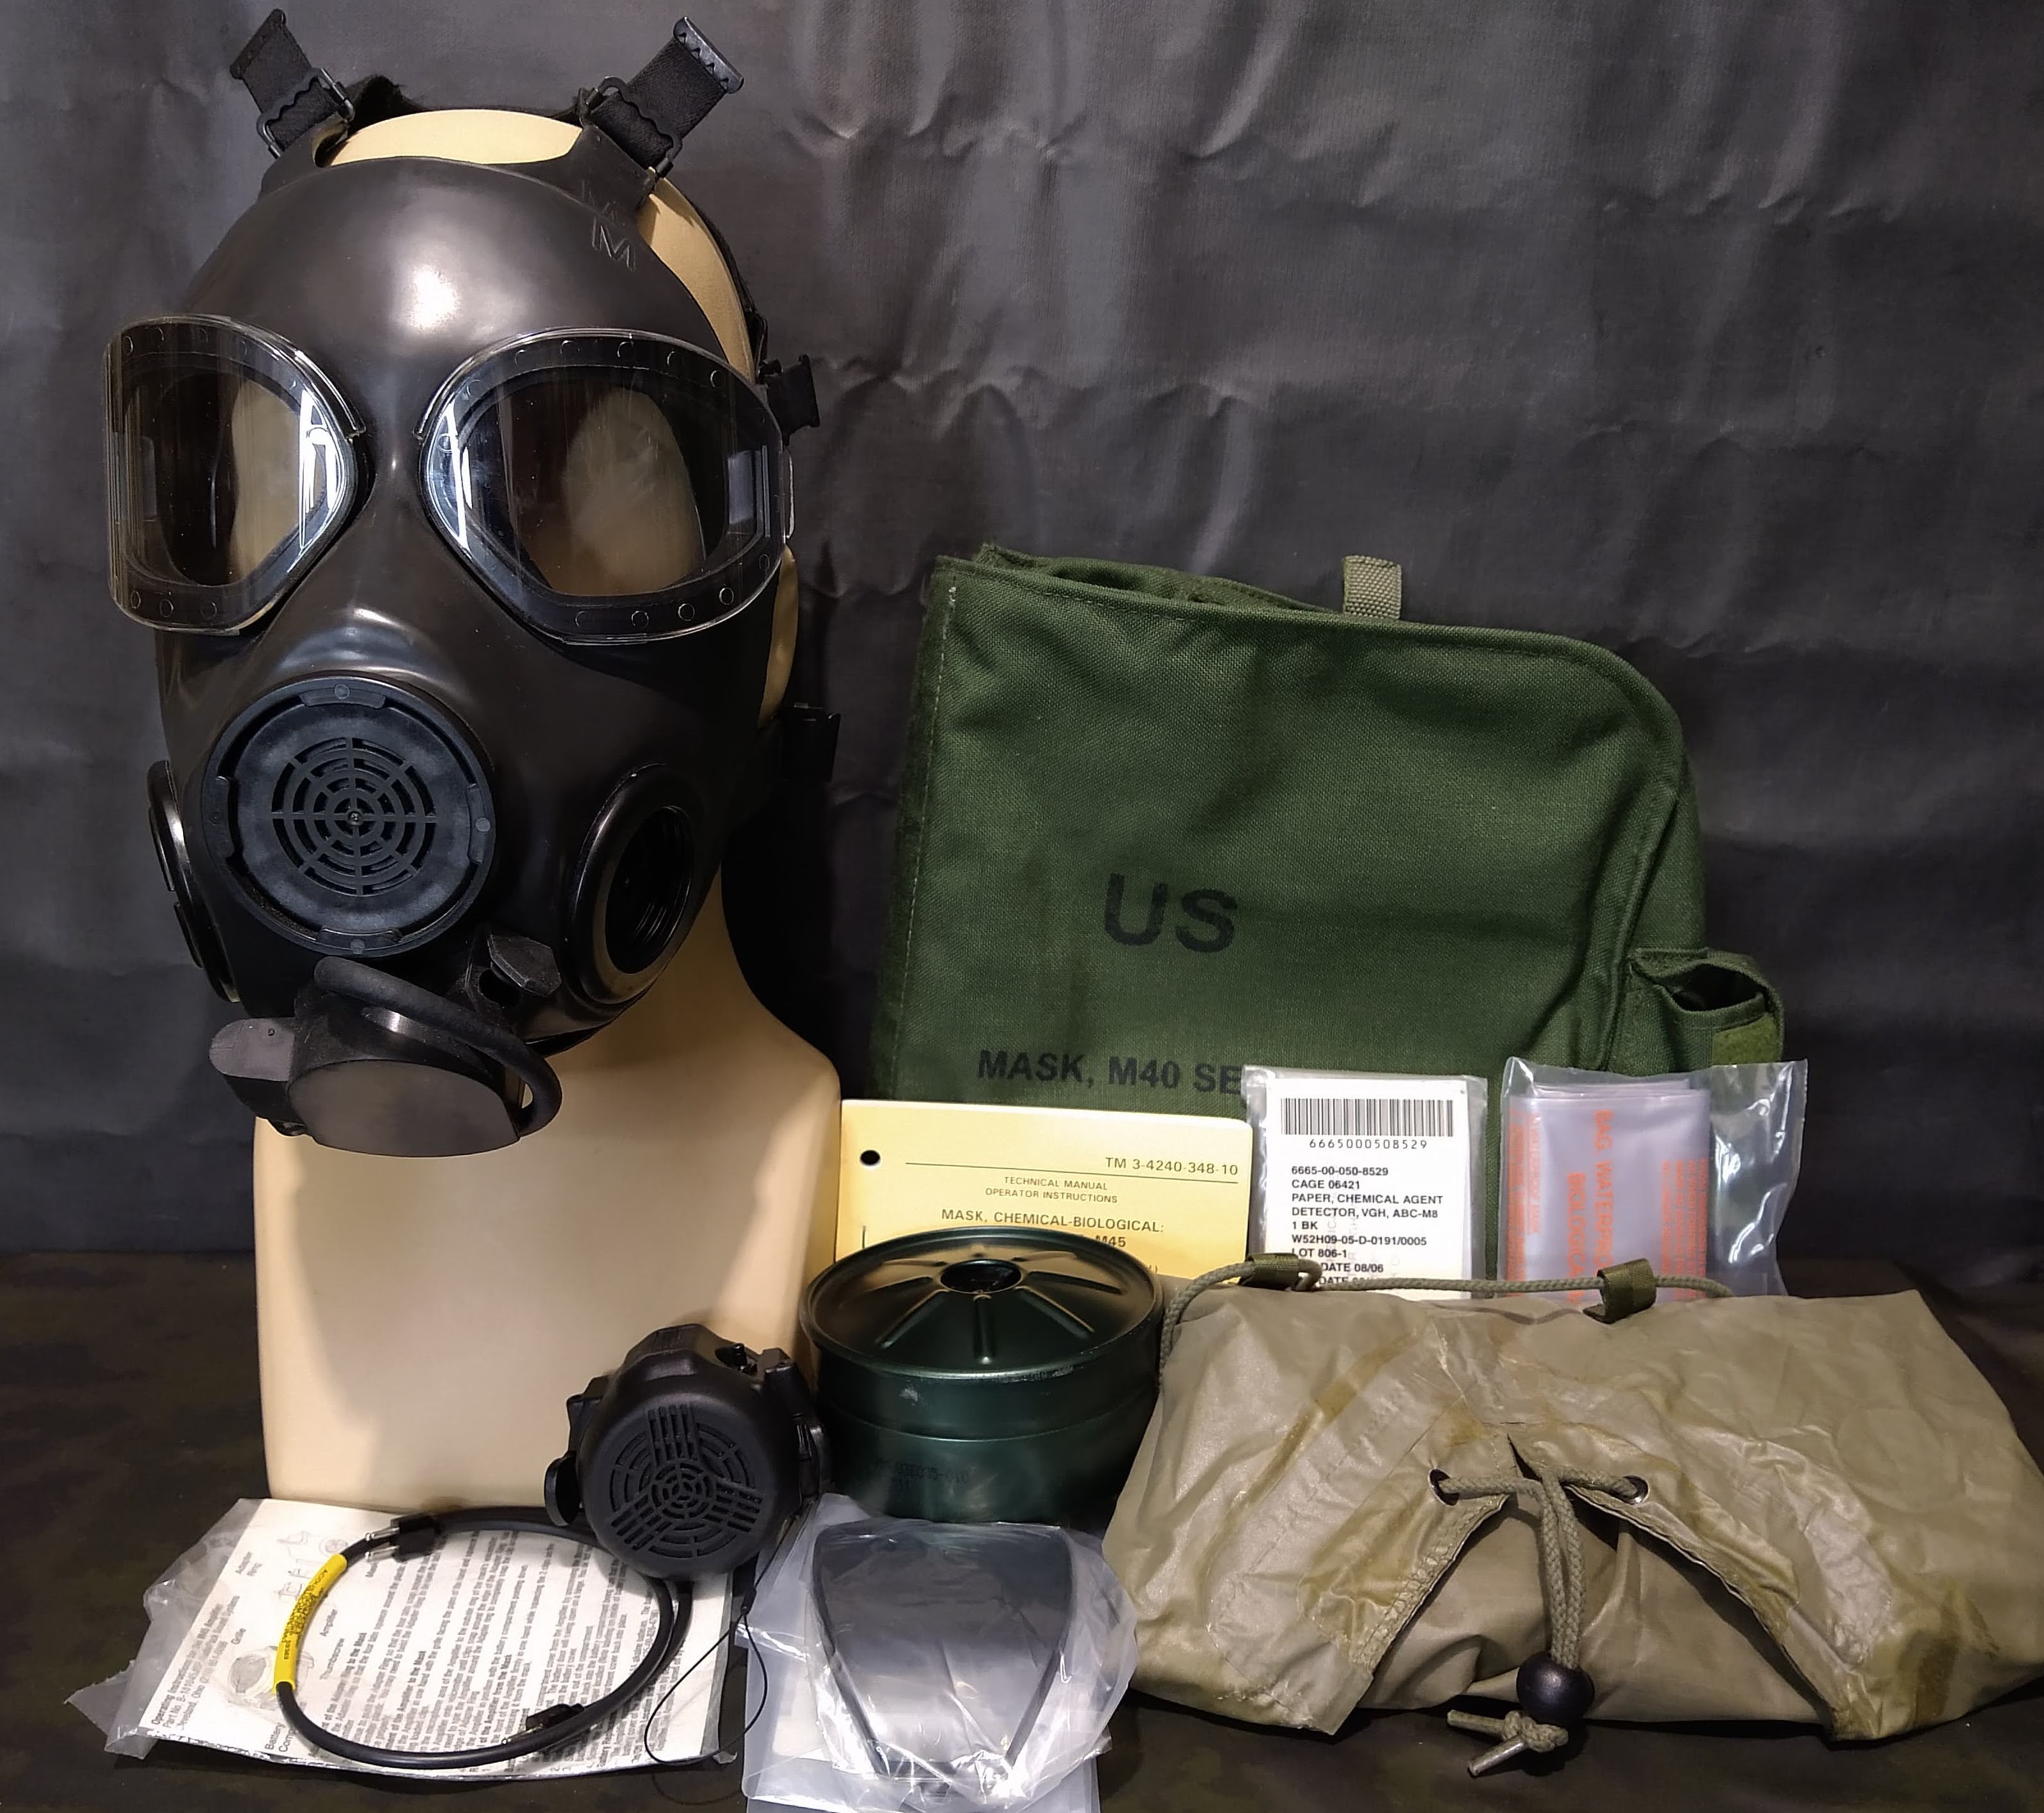 MCU-2/P protective mask - Wikipedia